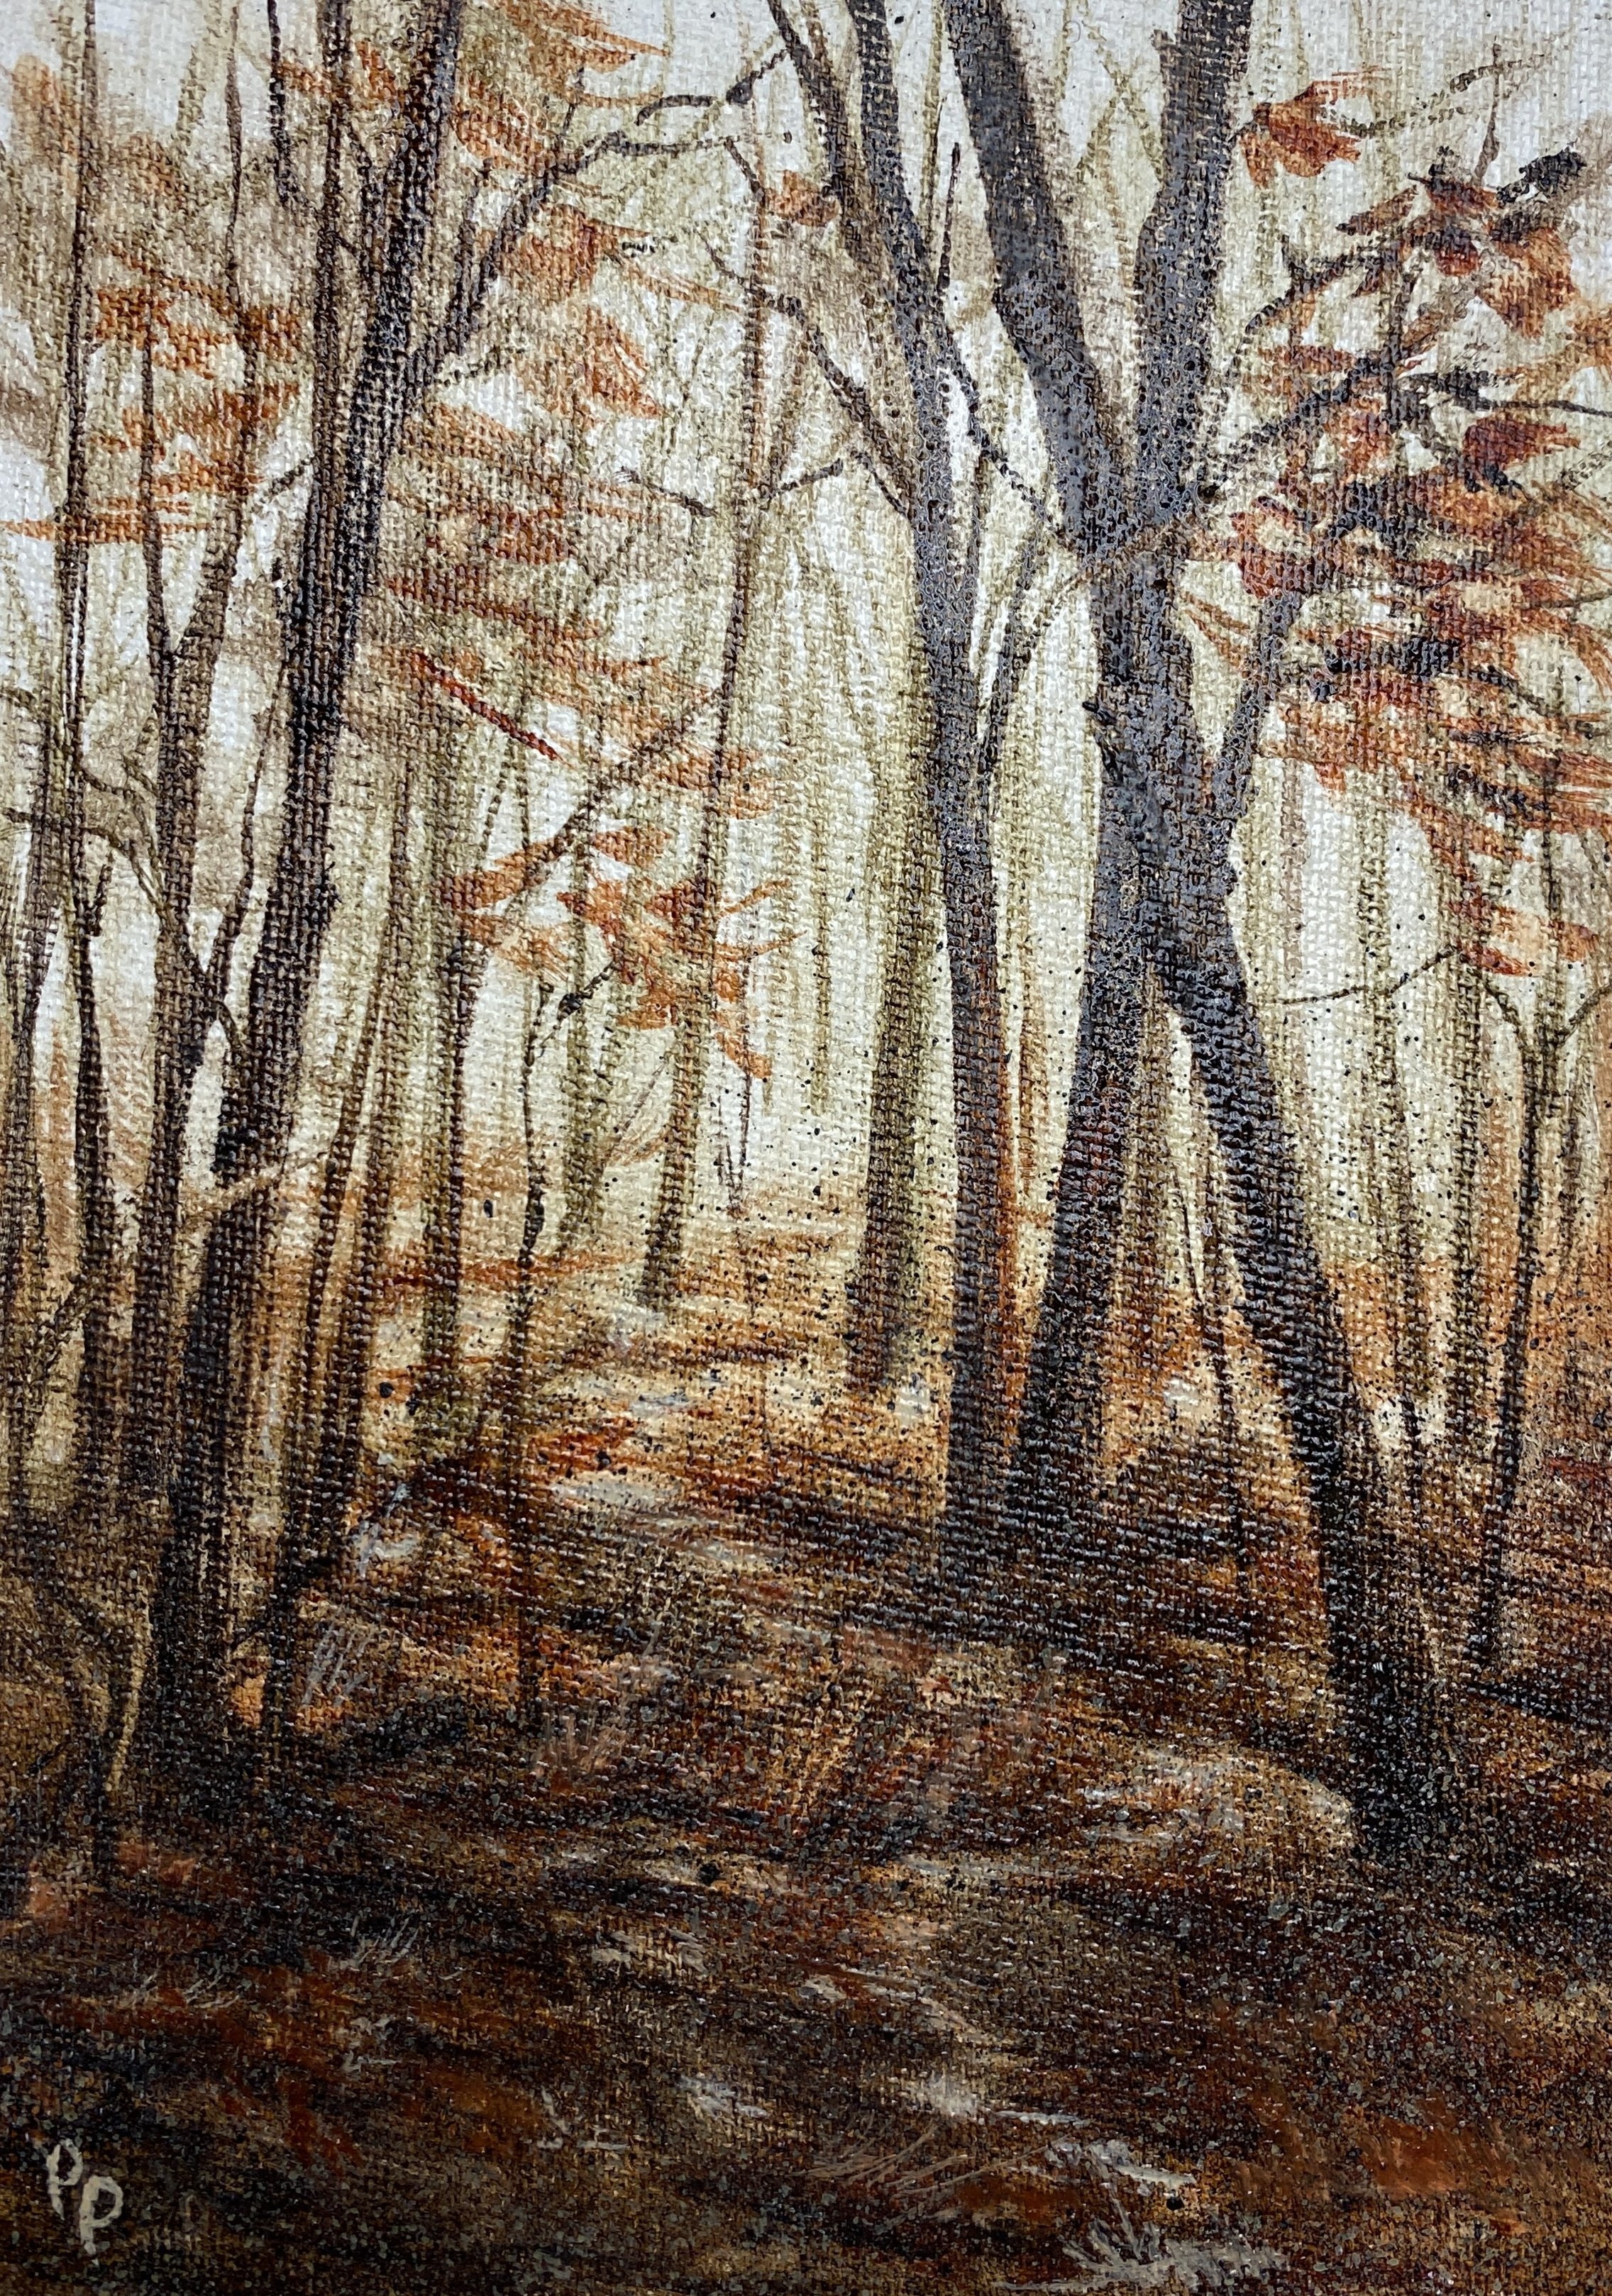 Pocono Woods Landscape Study